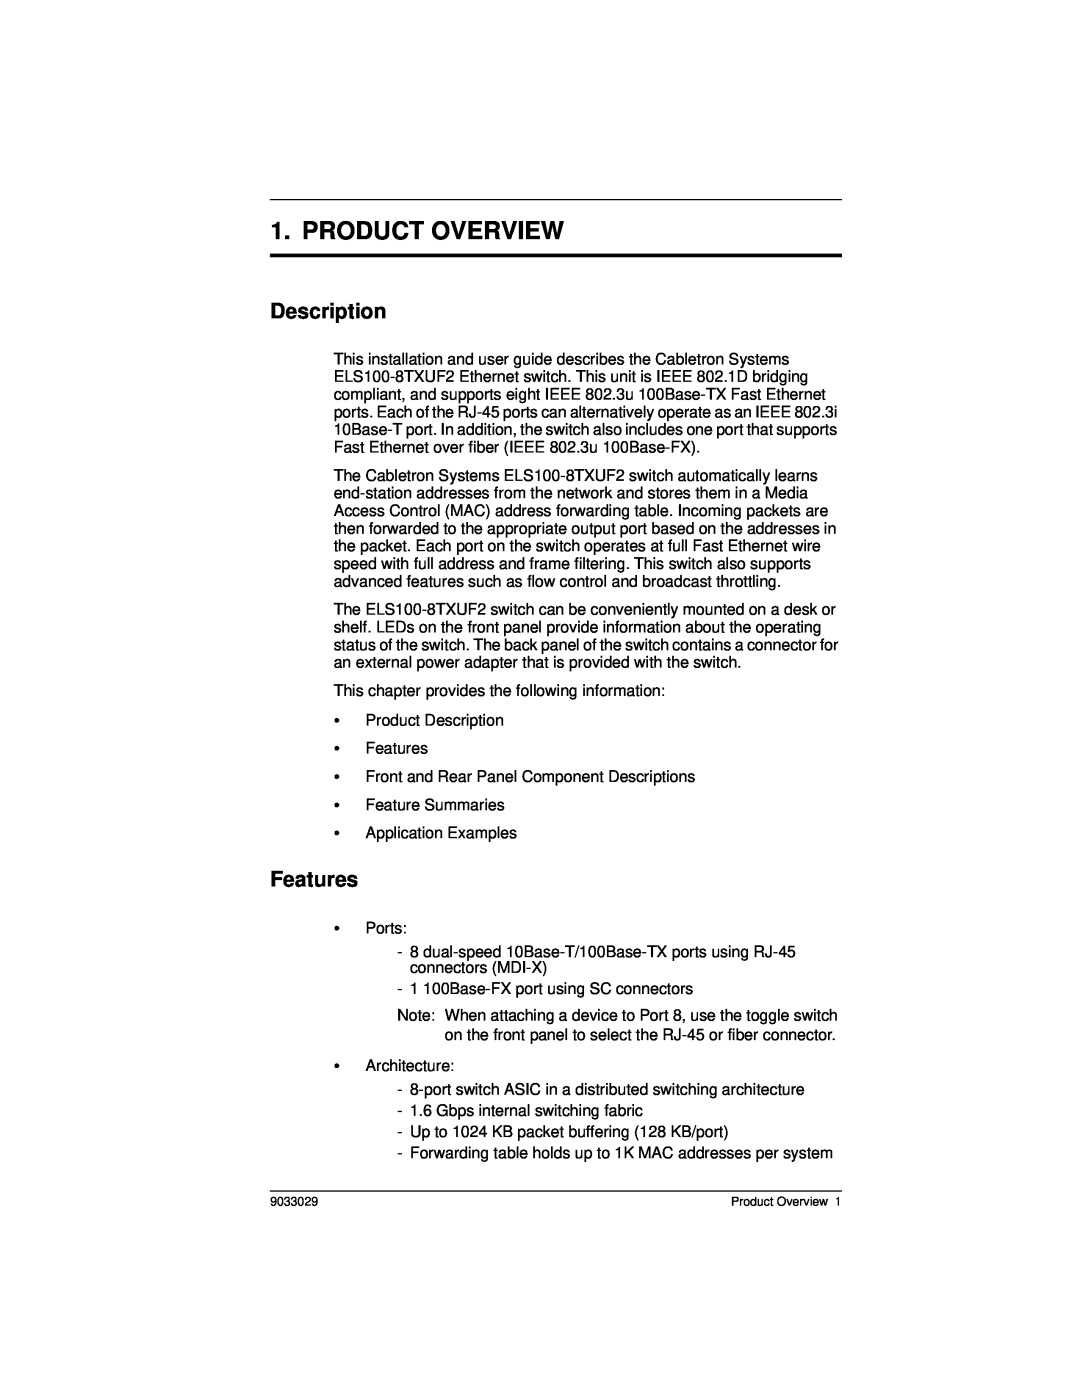 Cabletron Systems ELS100-8TXUF2 manual Product Overview, Description, Features 